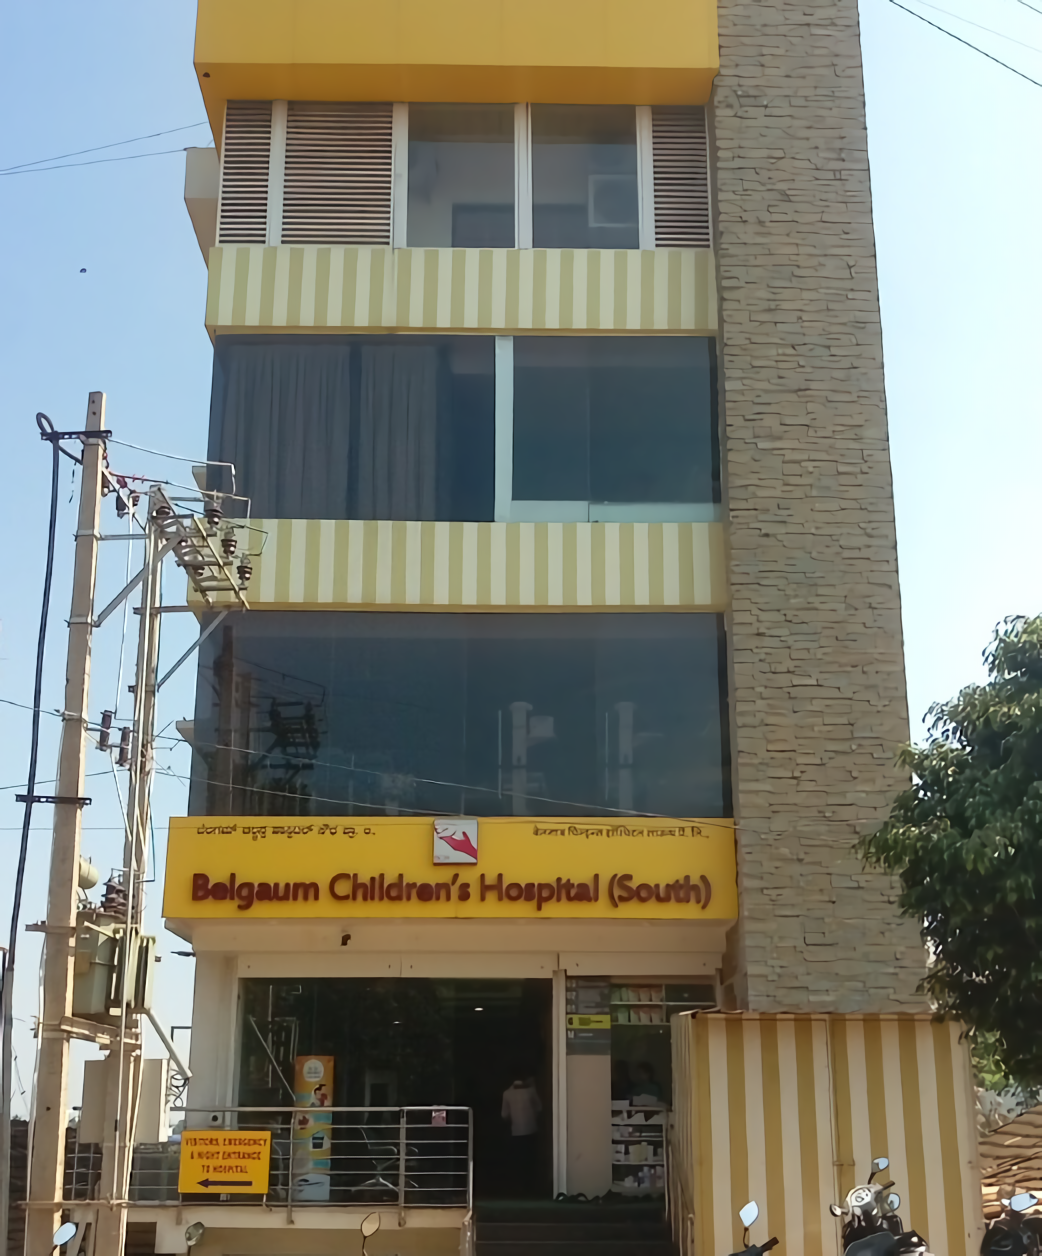 Belgaum Children's Hospital